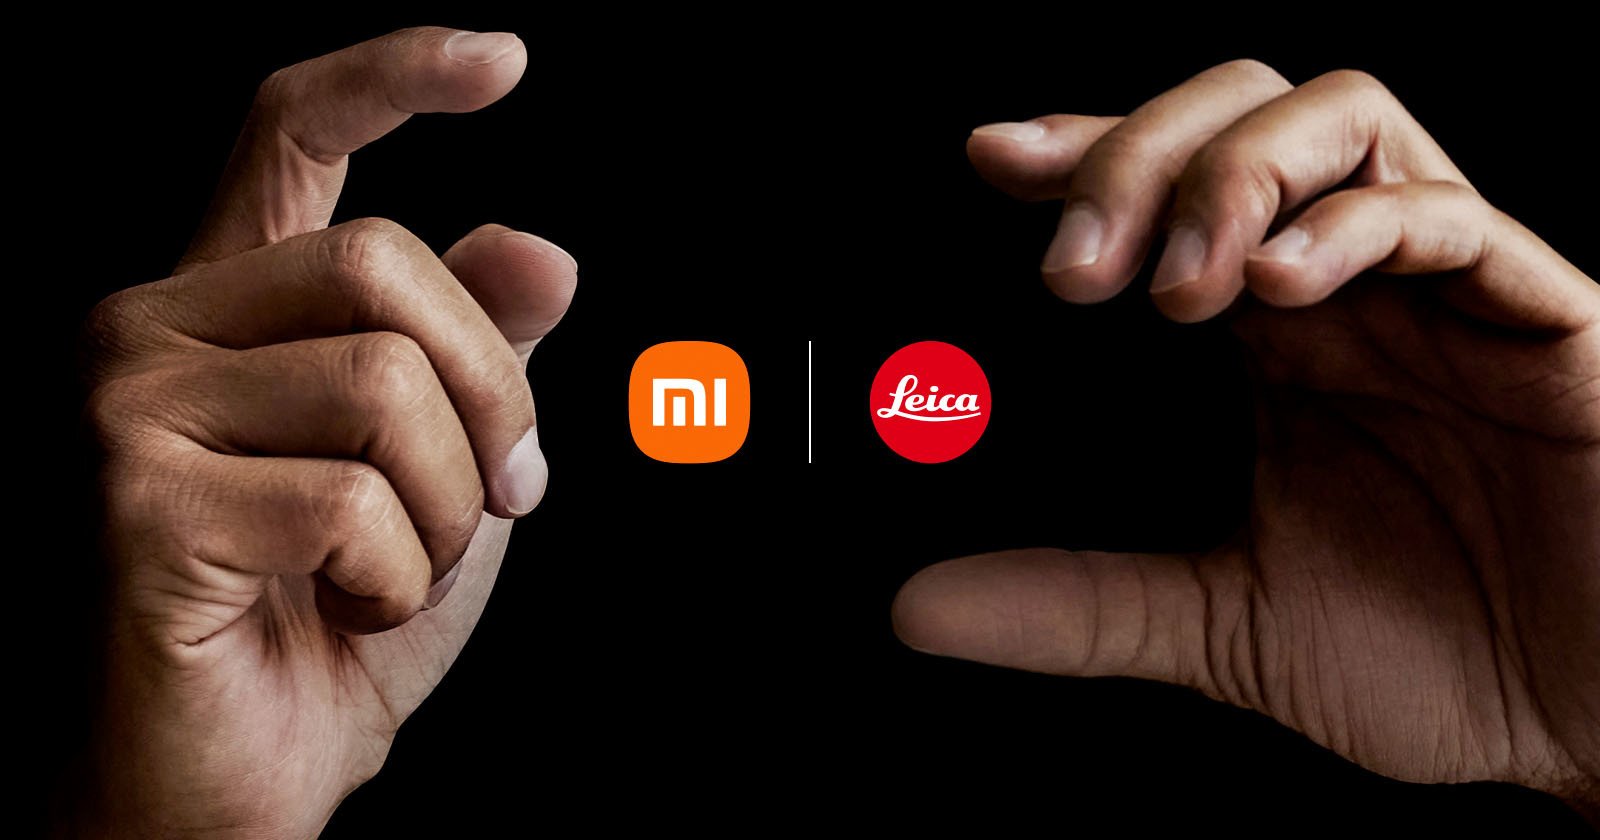  xiaomi leica partner launch jointly developed smartphones 